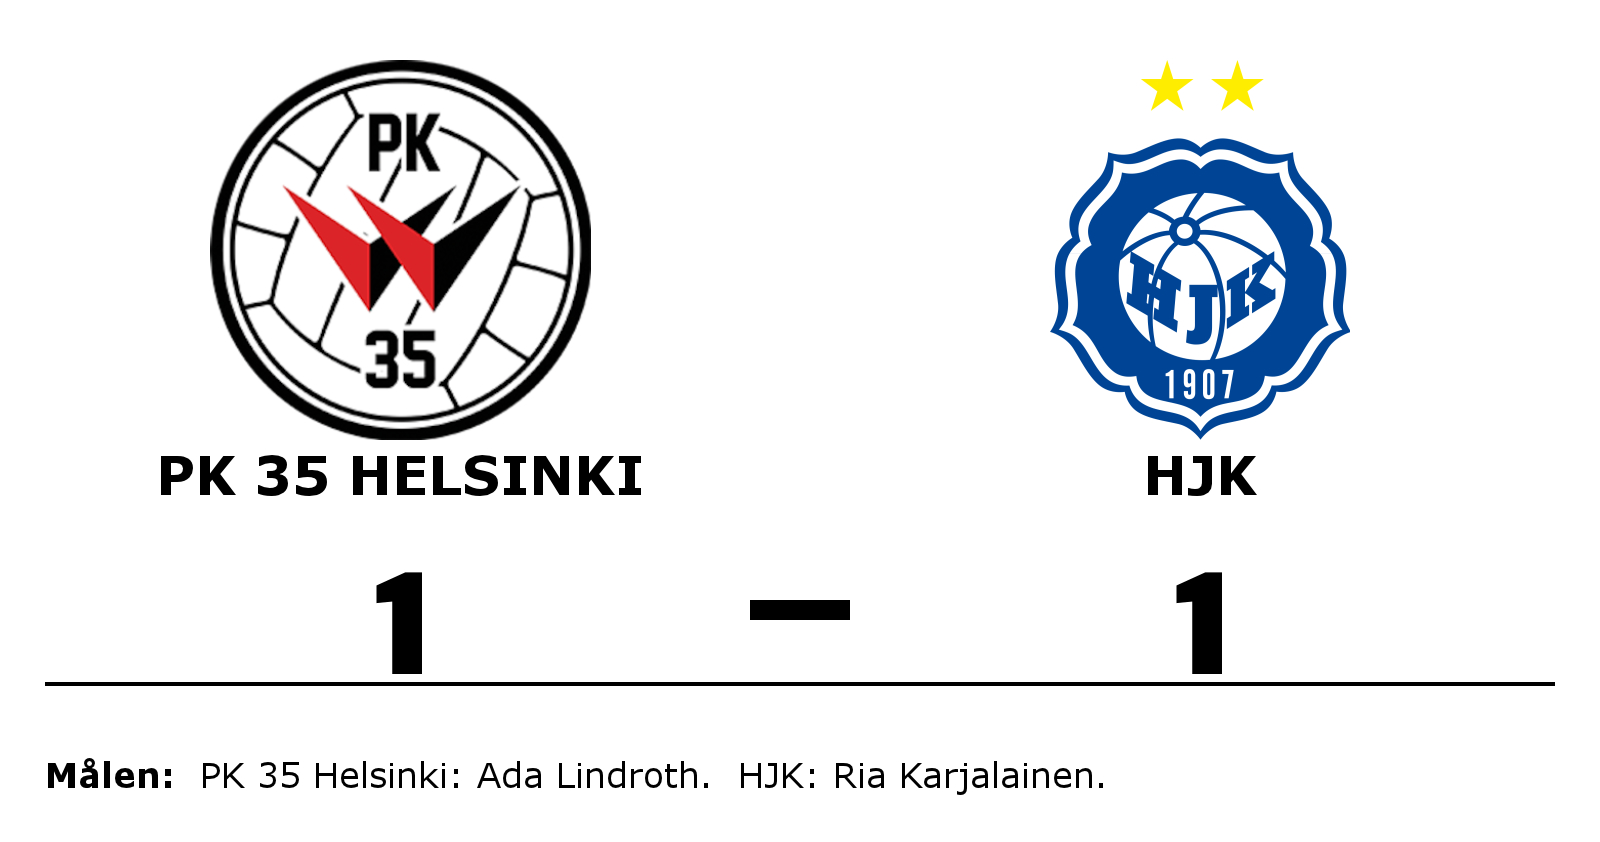 PK 35 Helsinki spelade lika mot HJK